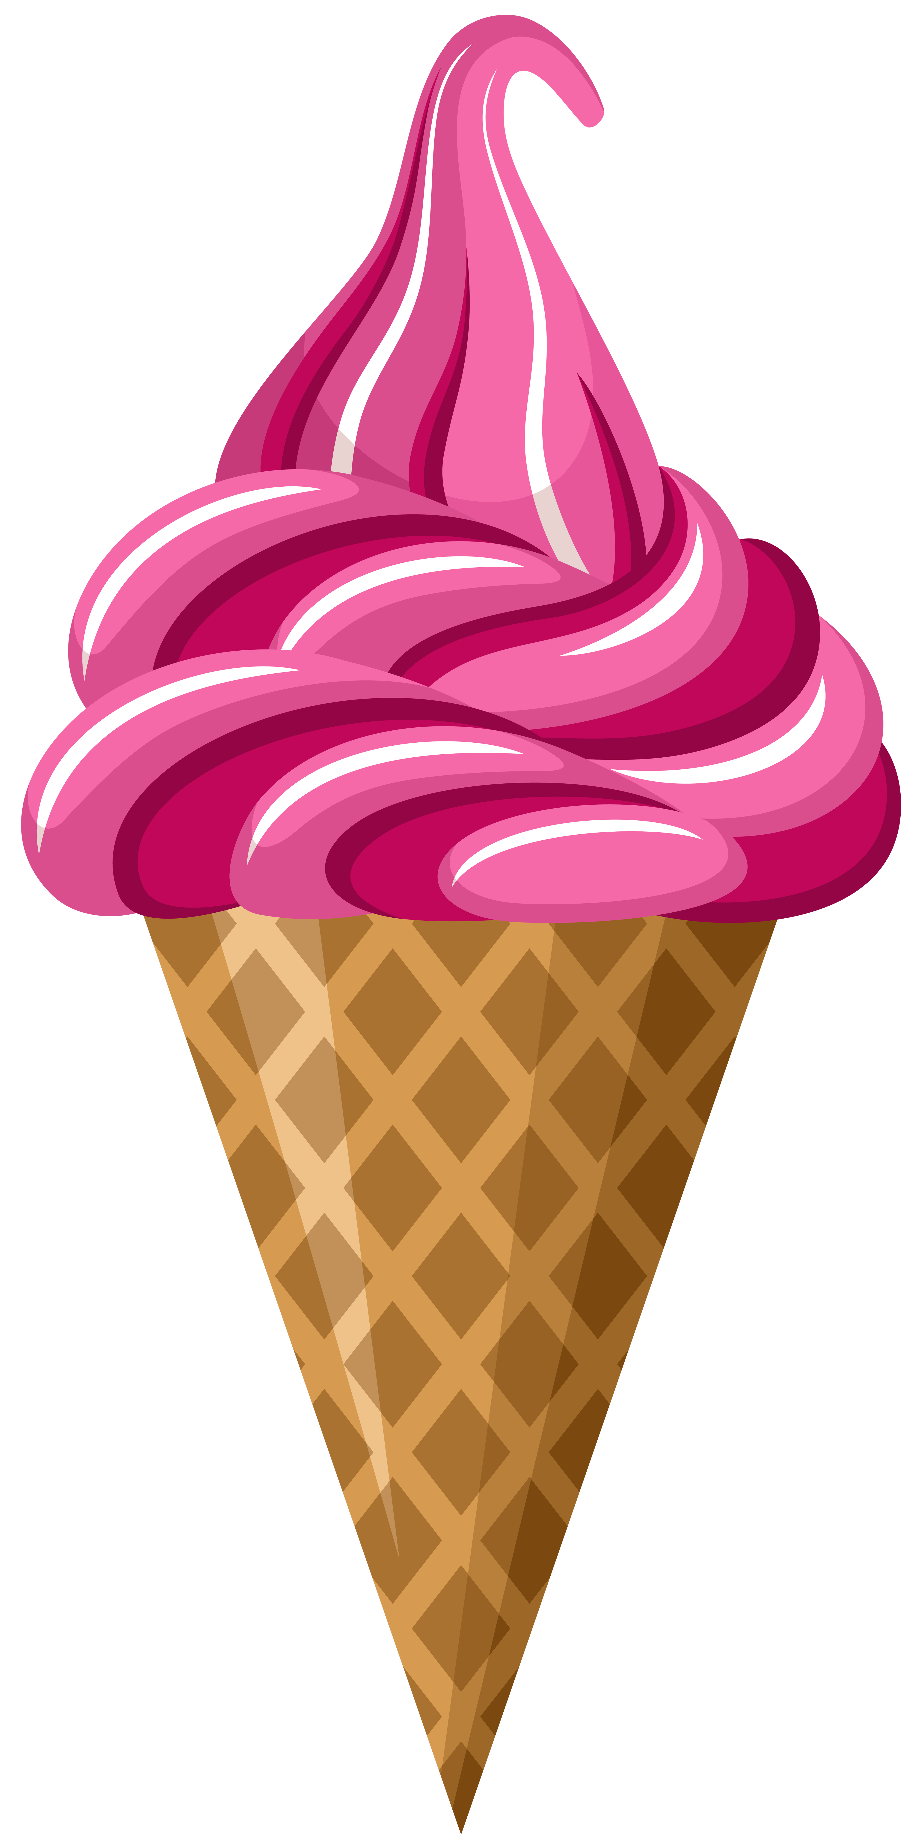 ice cream cone clipart high resolution